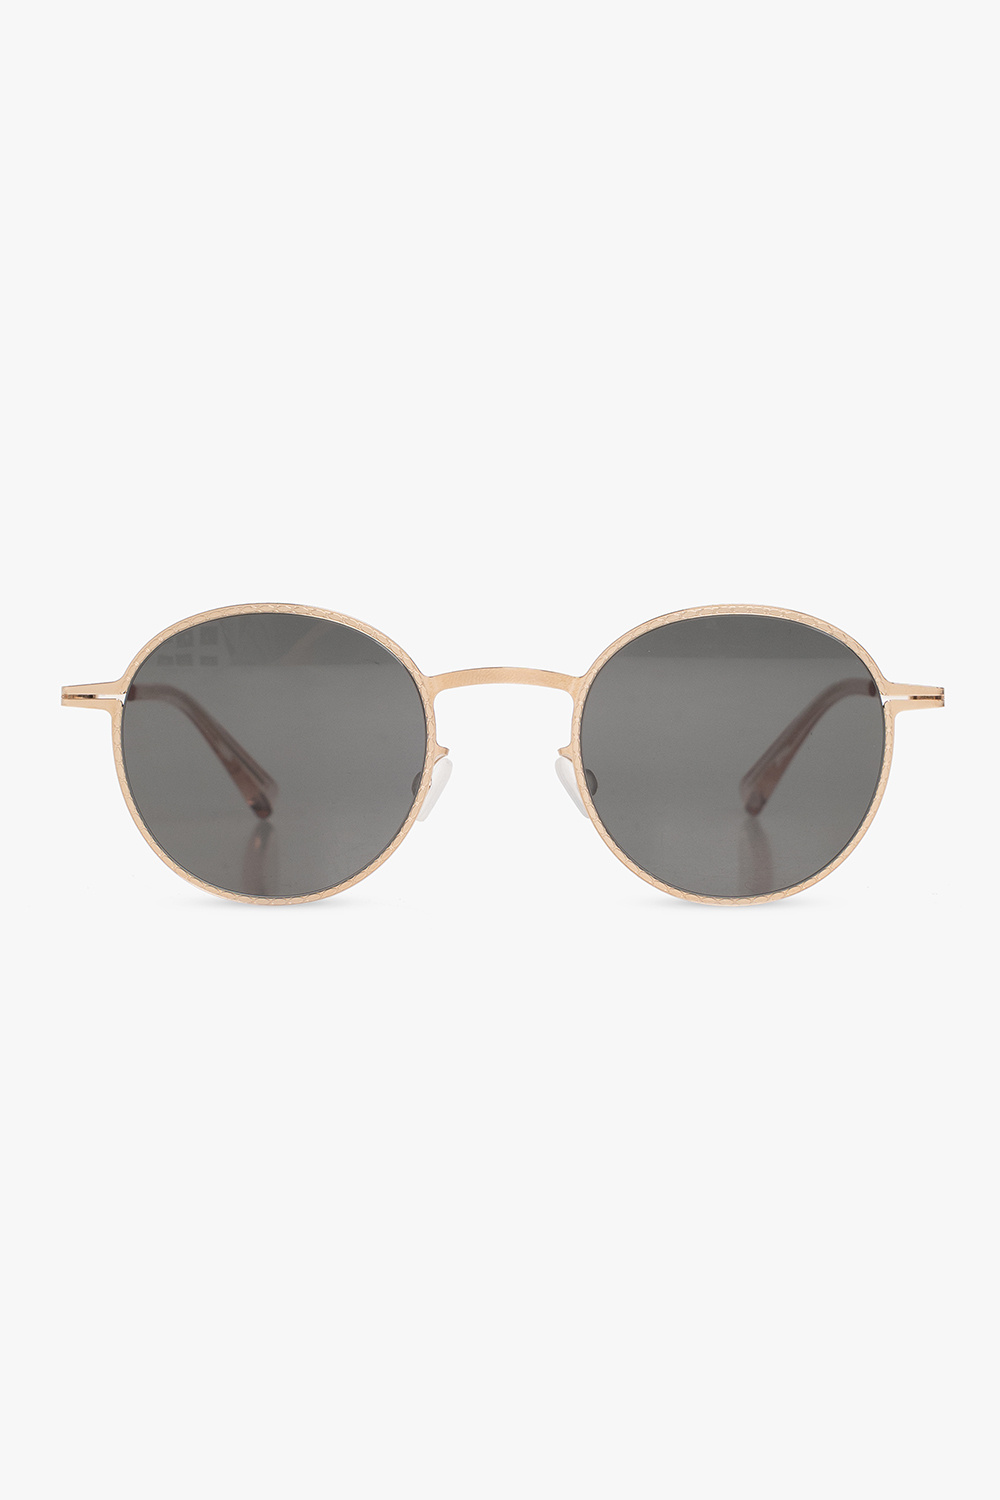 Mykita ‘Nis’ Alliance sunglasses